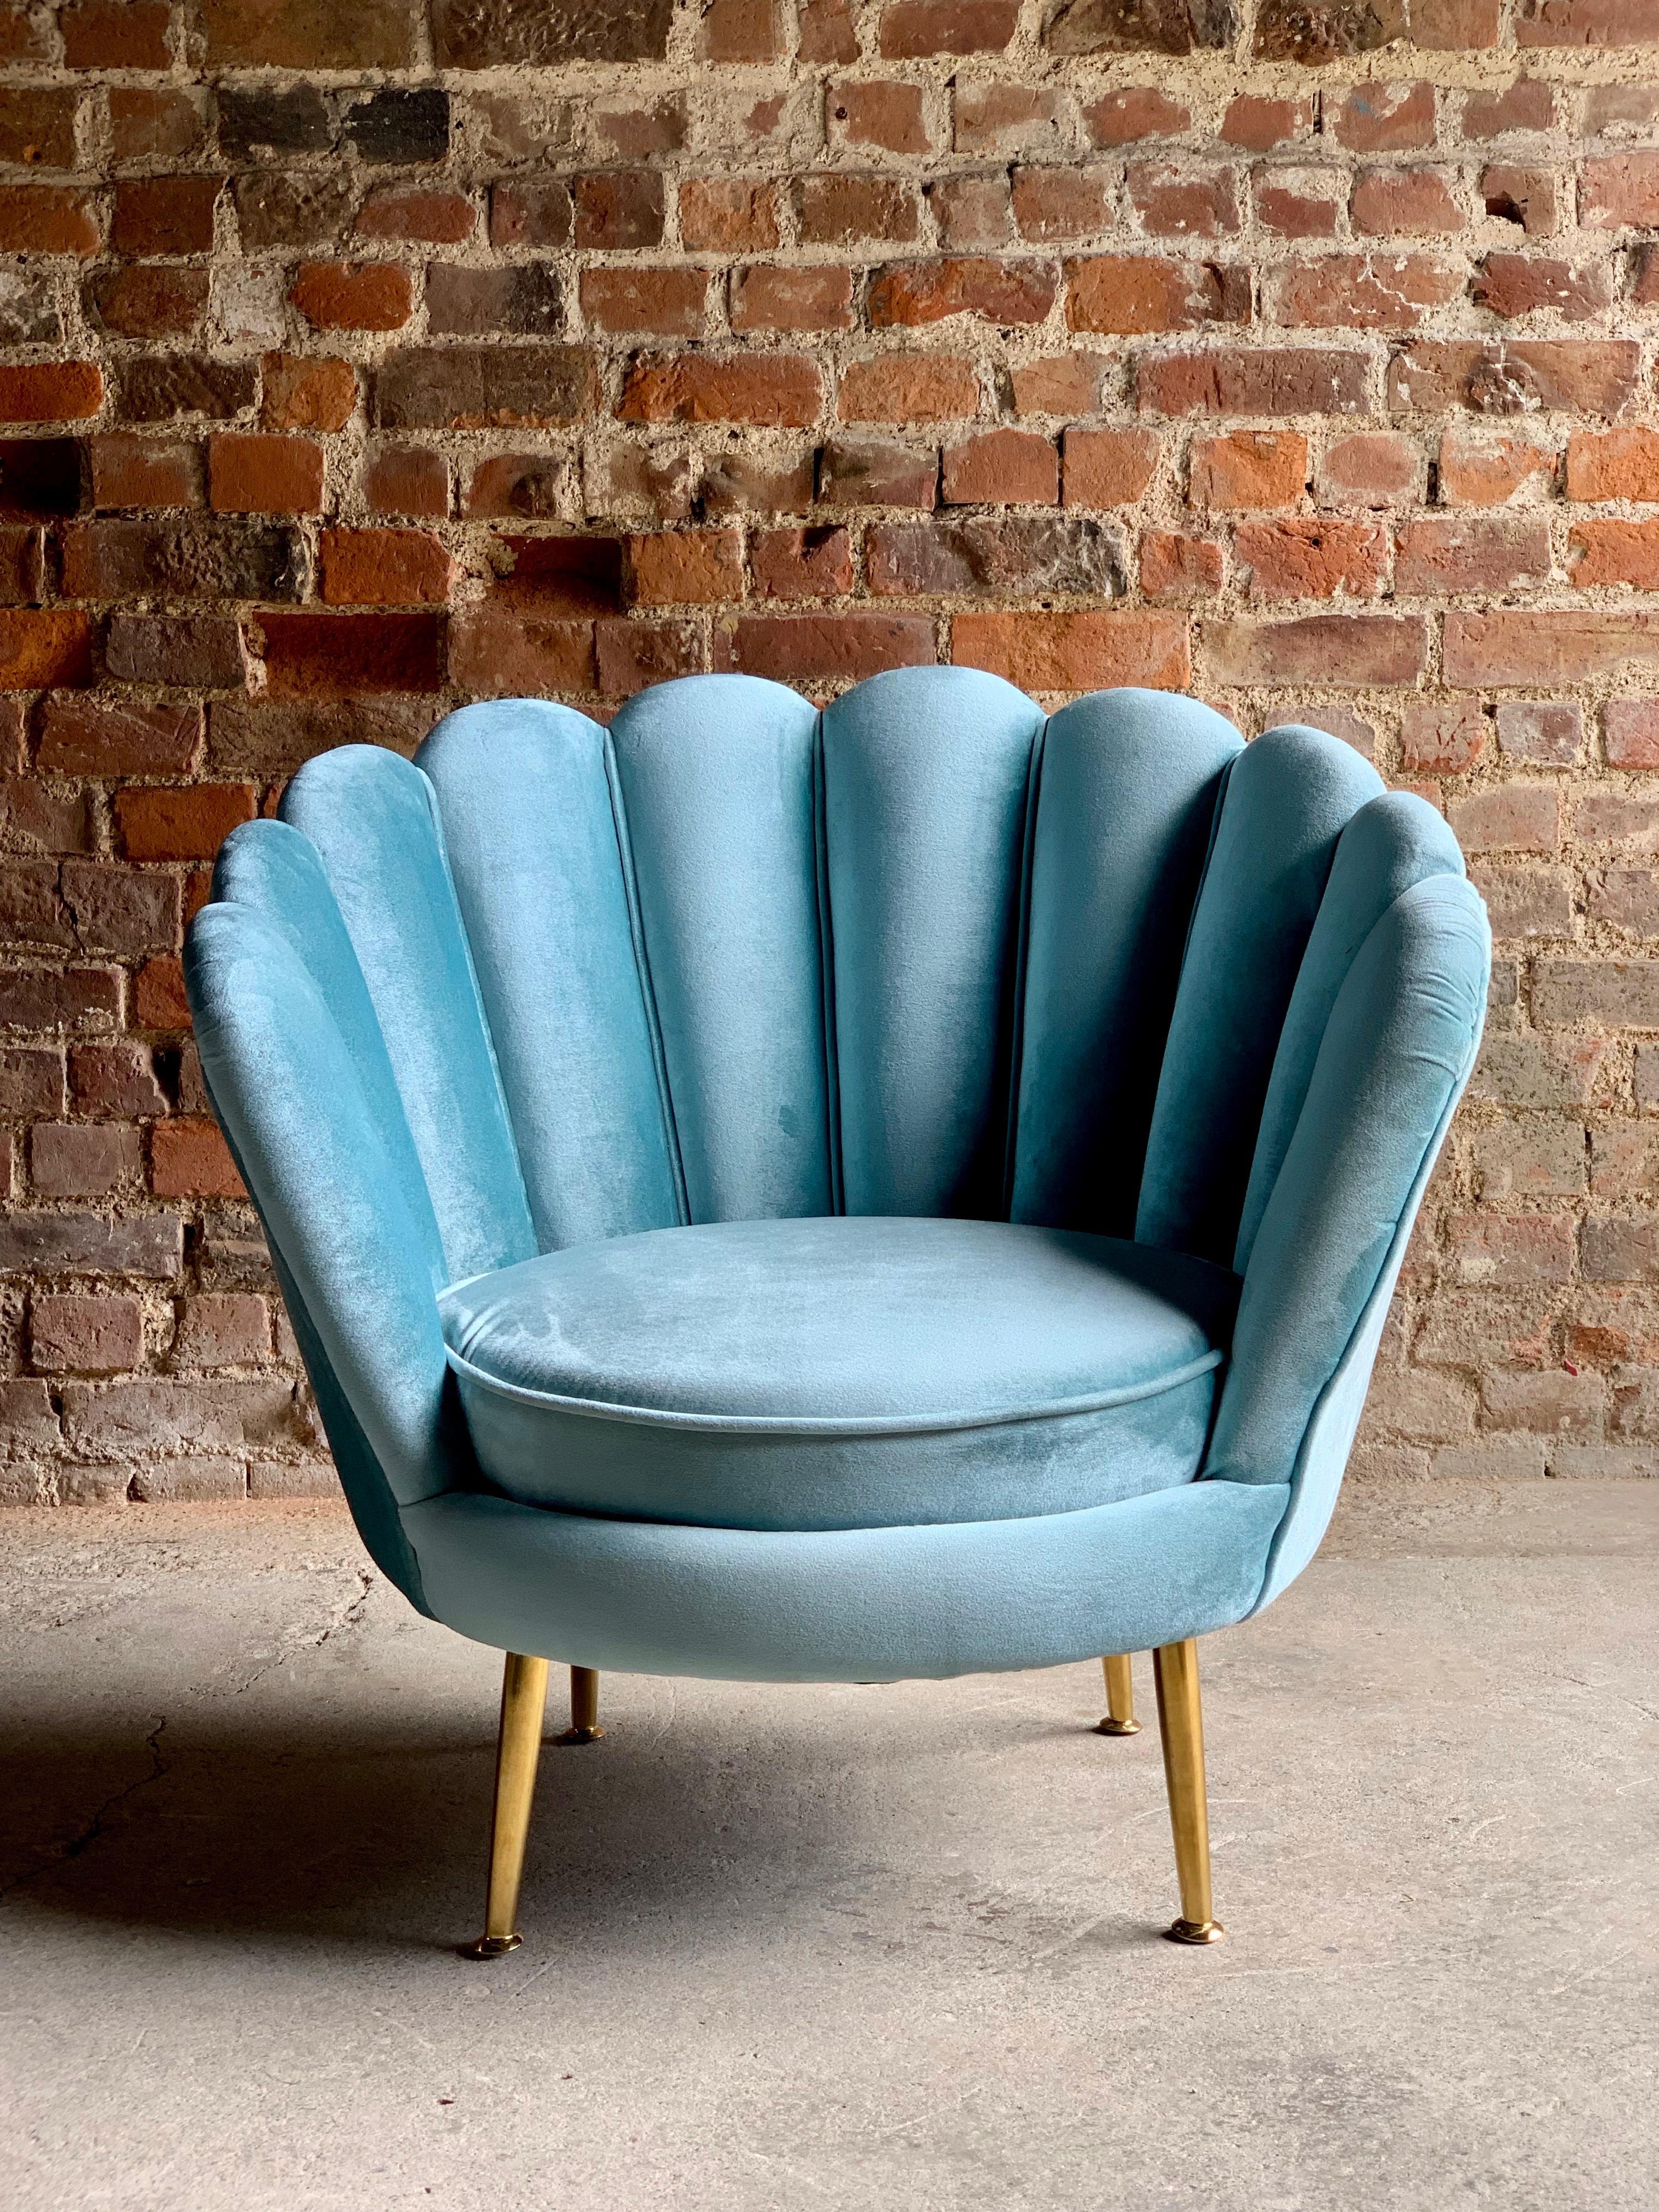 Contemporary Art Deco Boudoir Cocktail Chair in Turquoise Velvet 1920s Style